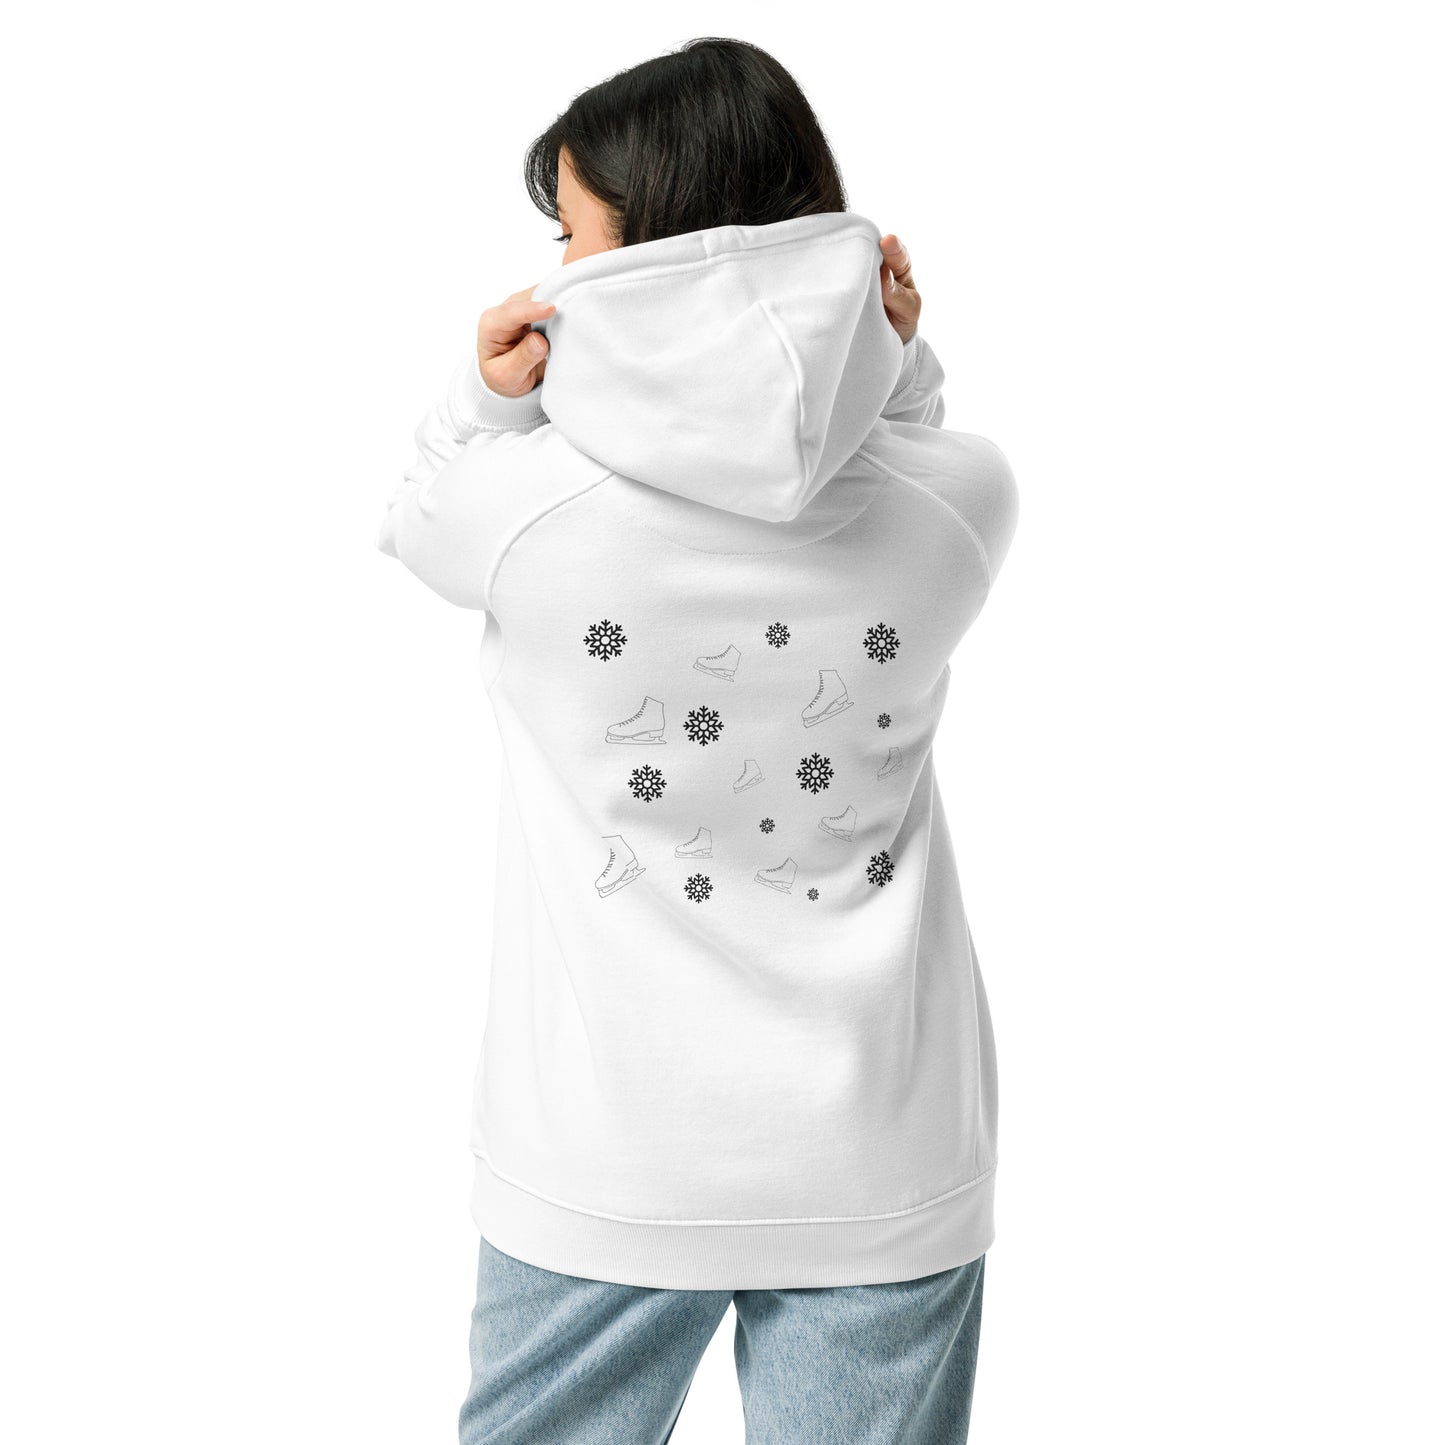 "Axel Club" Unisex eco raglan hoodie with double sided print